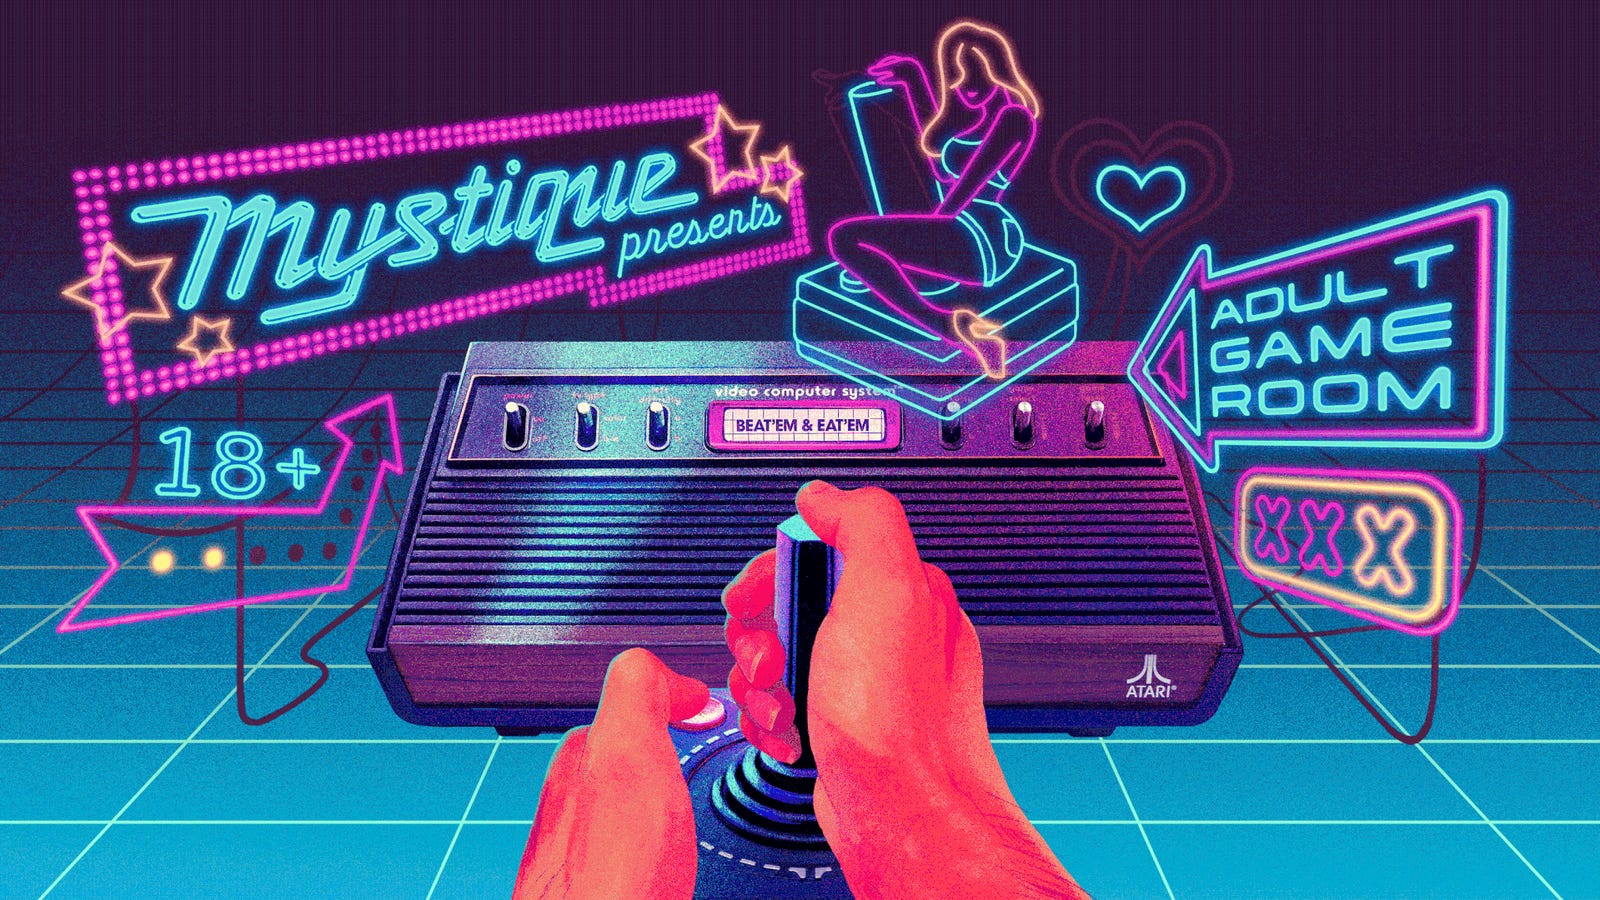 Xxx Sex Wap In Com Hd - Custer's Revenge And The Atari 2600 Porno Games: The Full Story